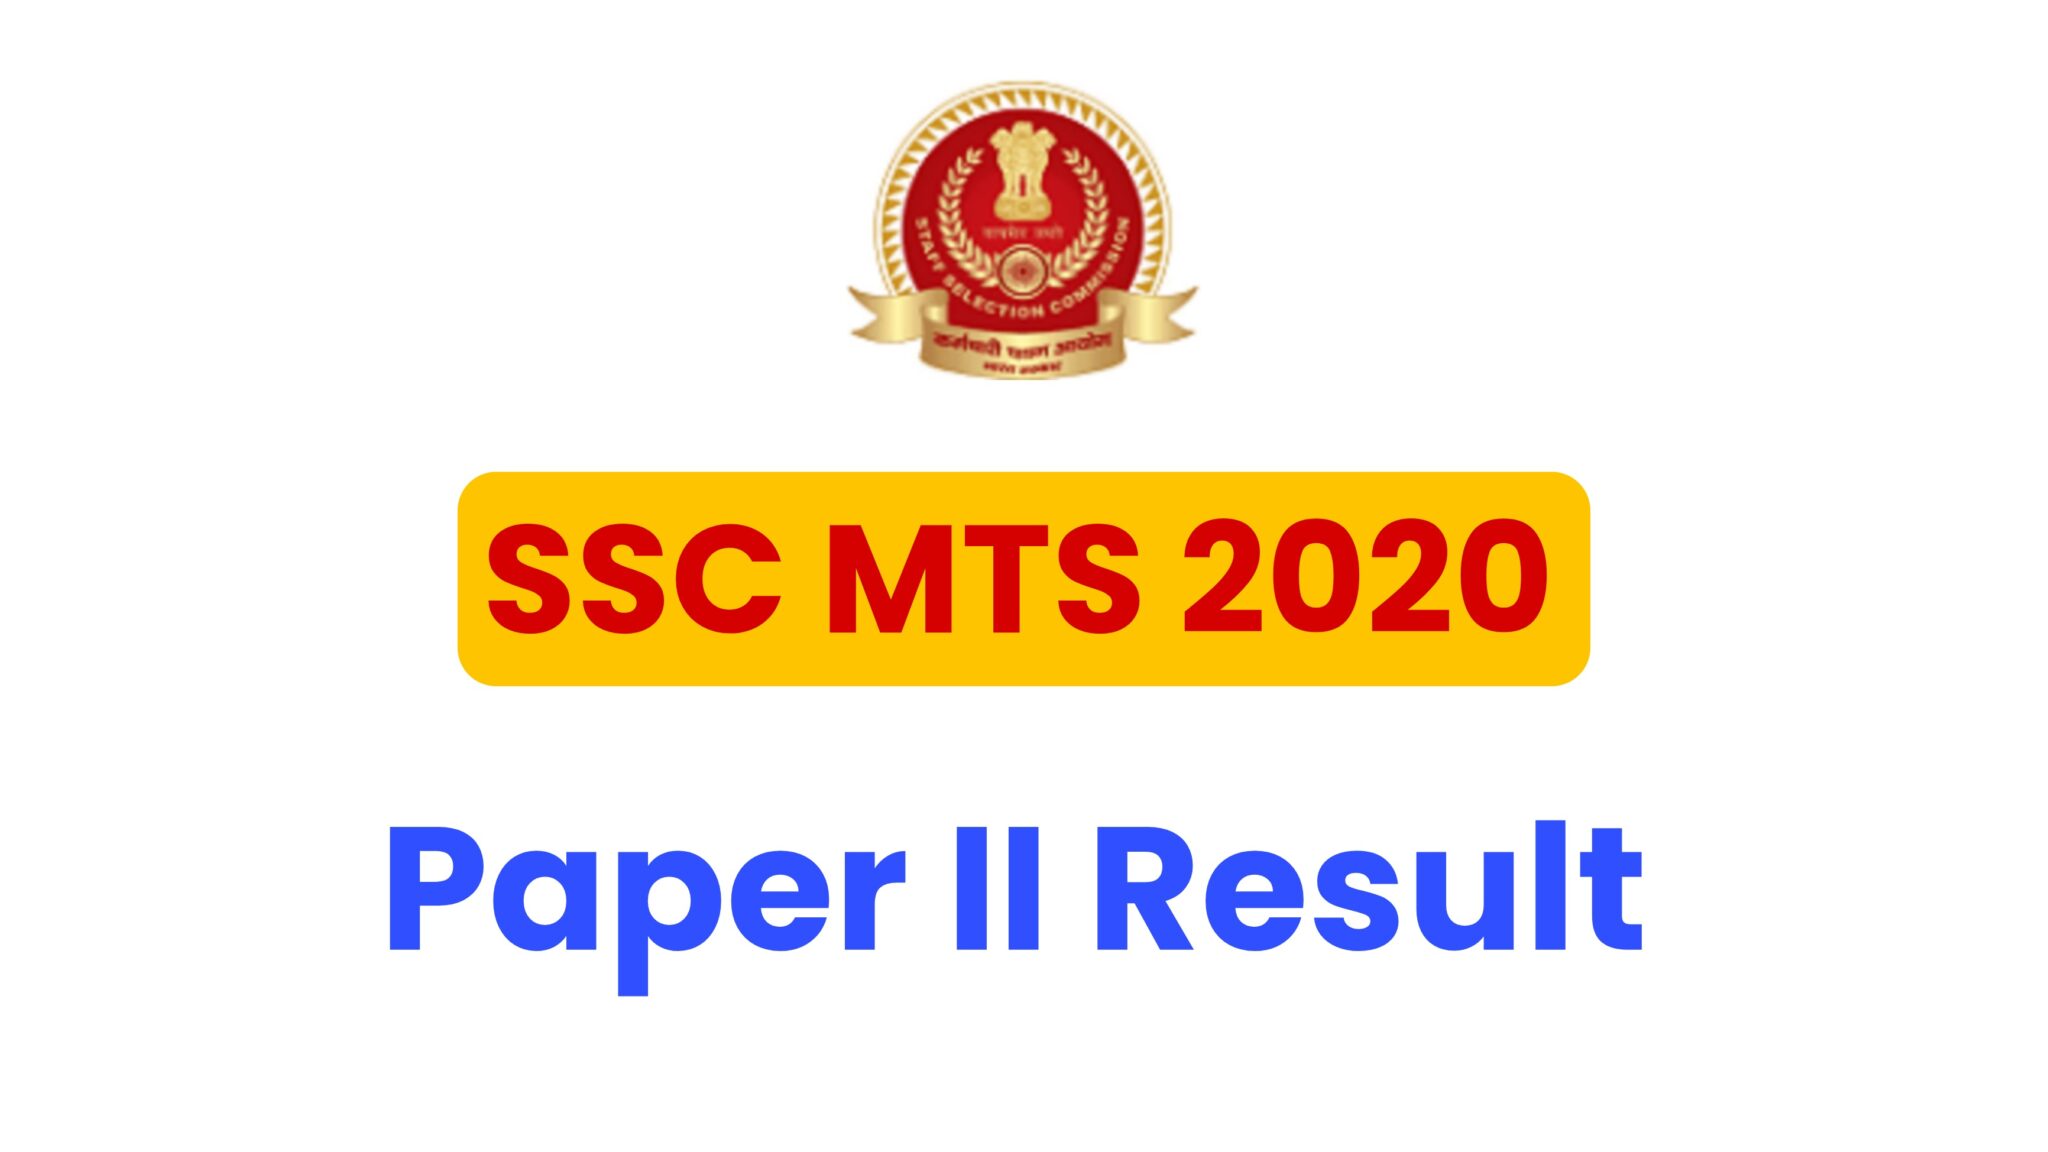 SSC MTS 2020 Paper II Result